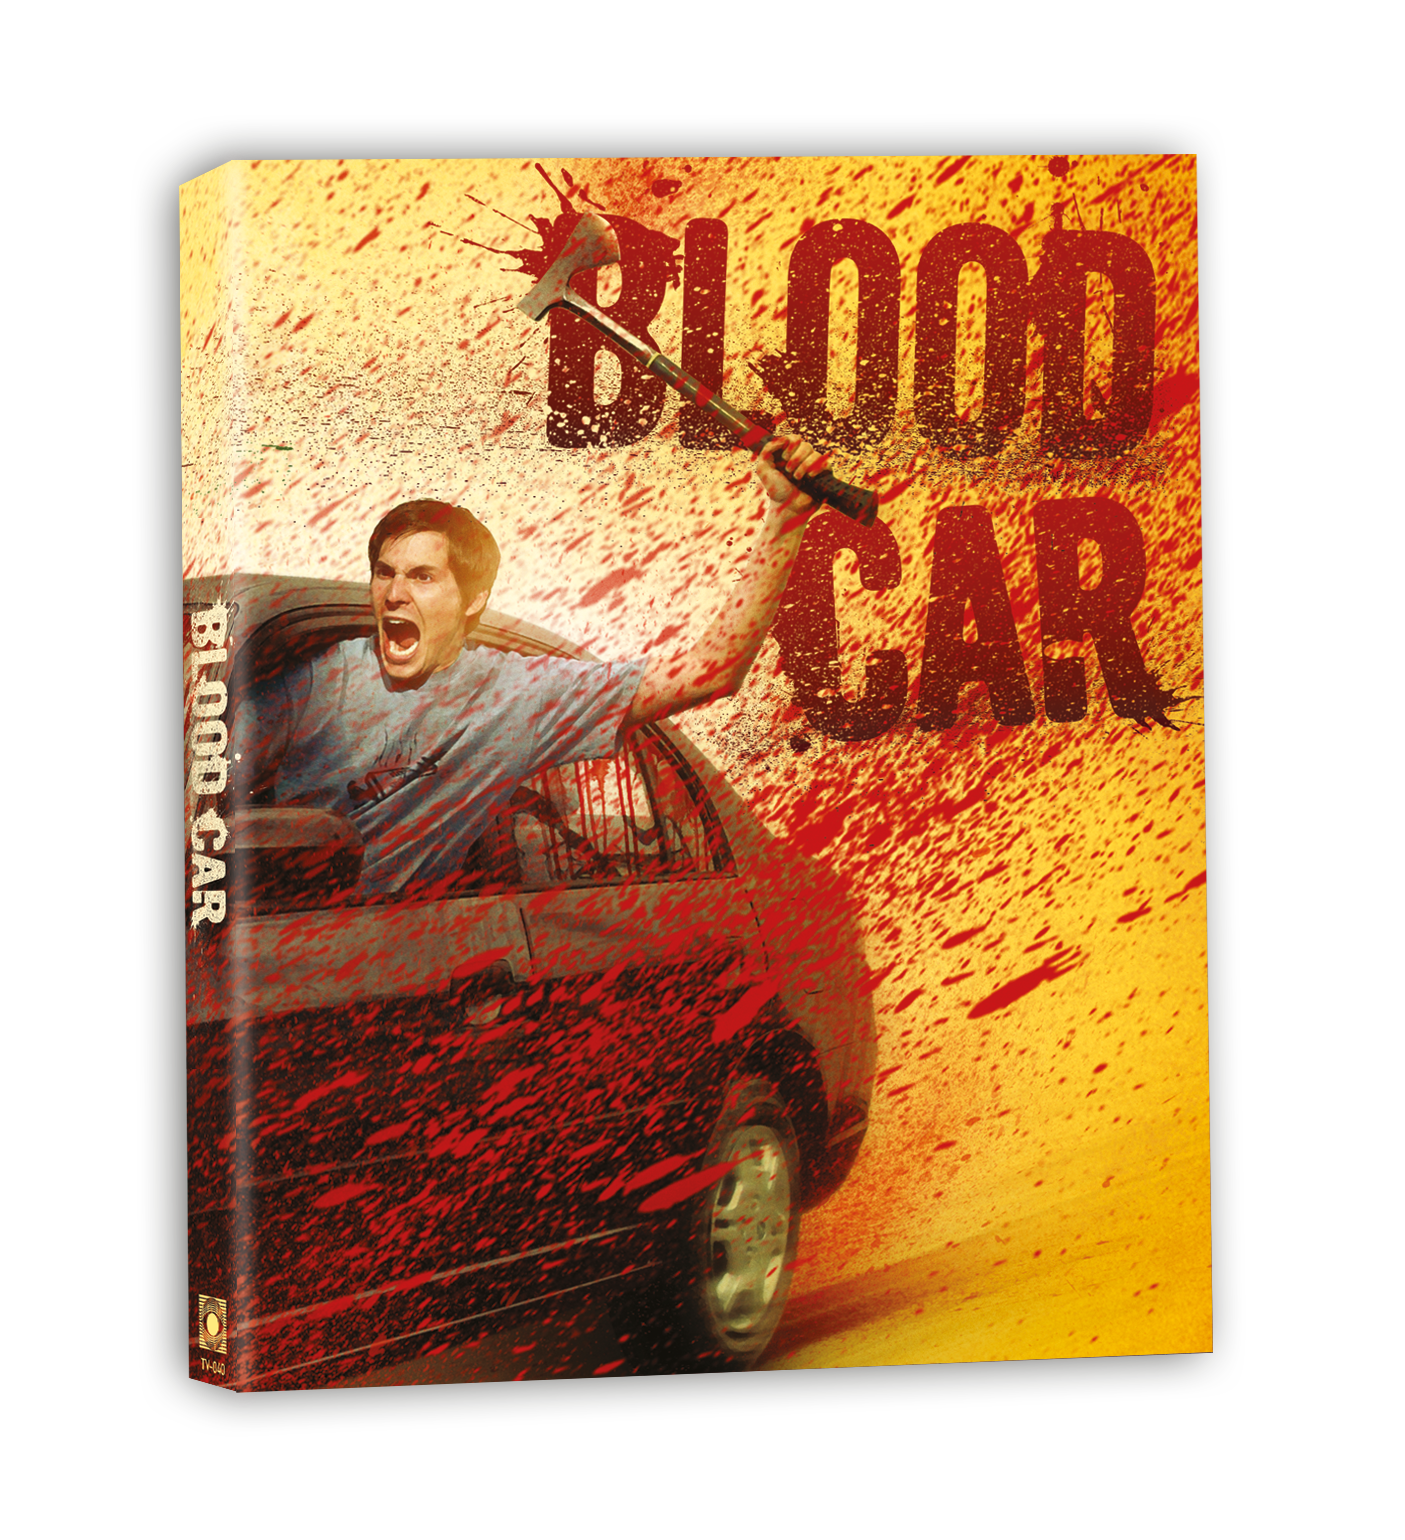 Blood Car (2007) blu-ray with slip